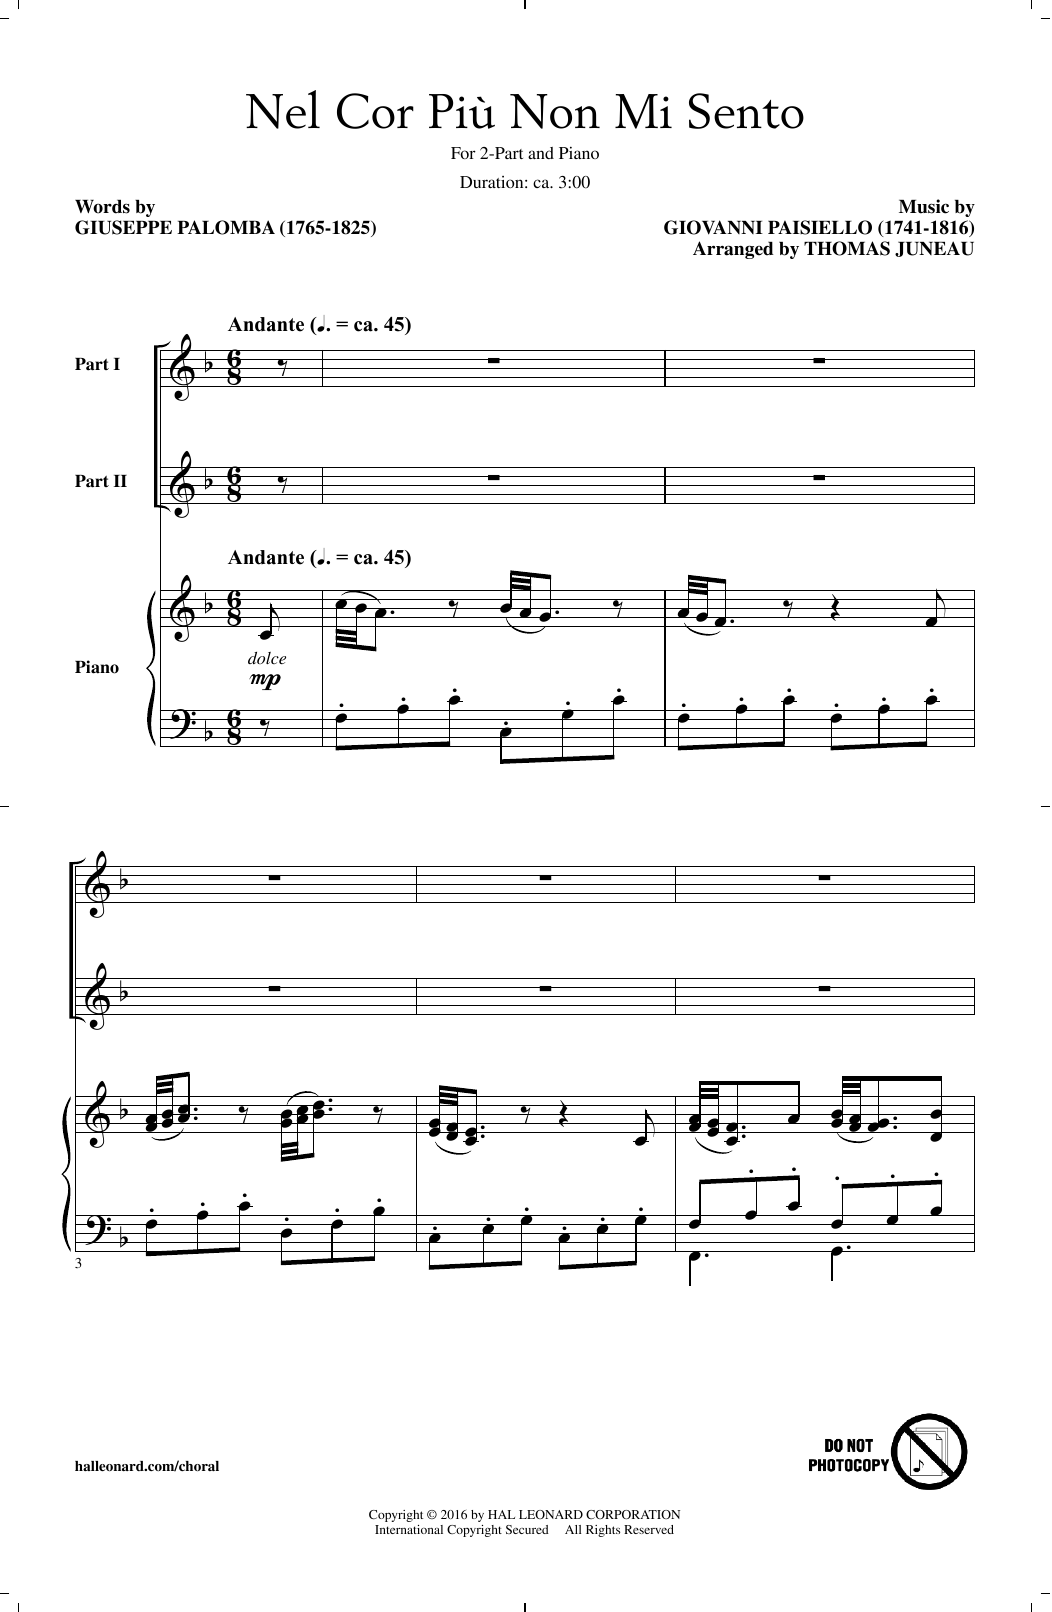 Download Thomas Juneau Nel Cor Piu Non Mi Sento Sheet Music and learn how to play 2-Part Choir PDF digital score in minutes